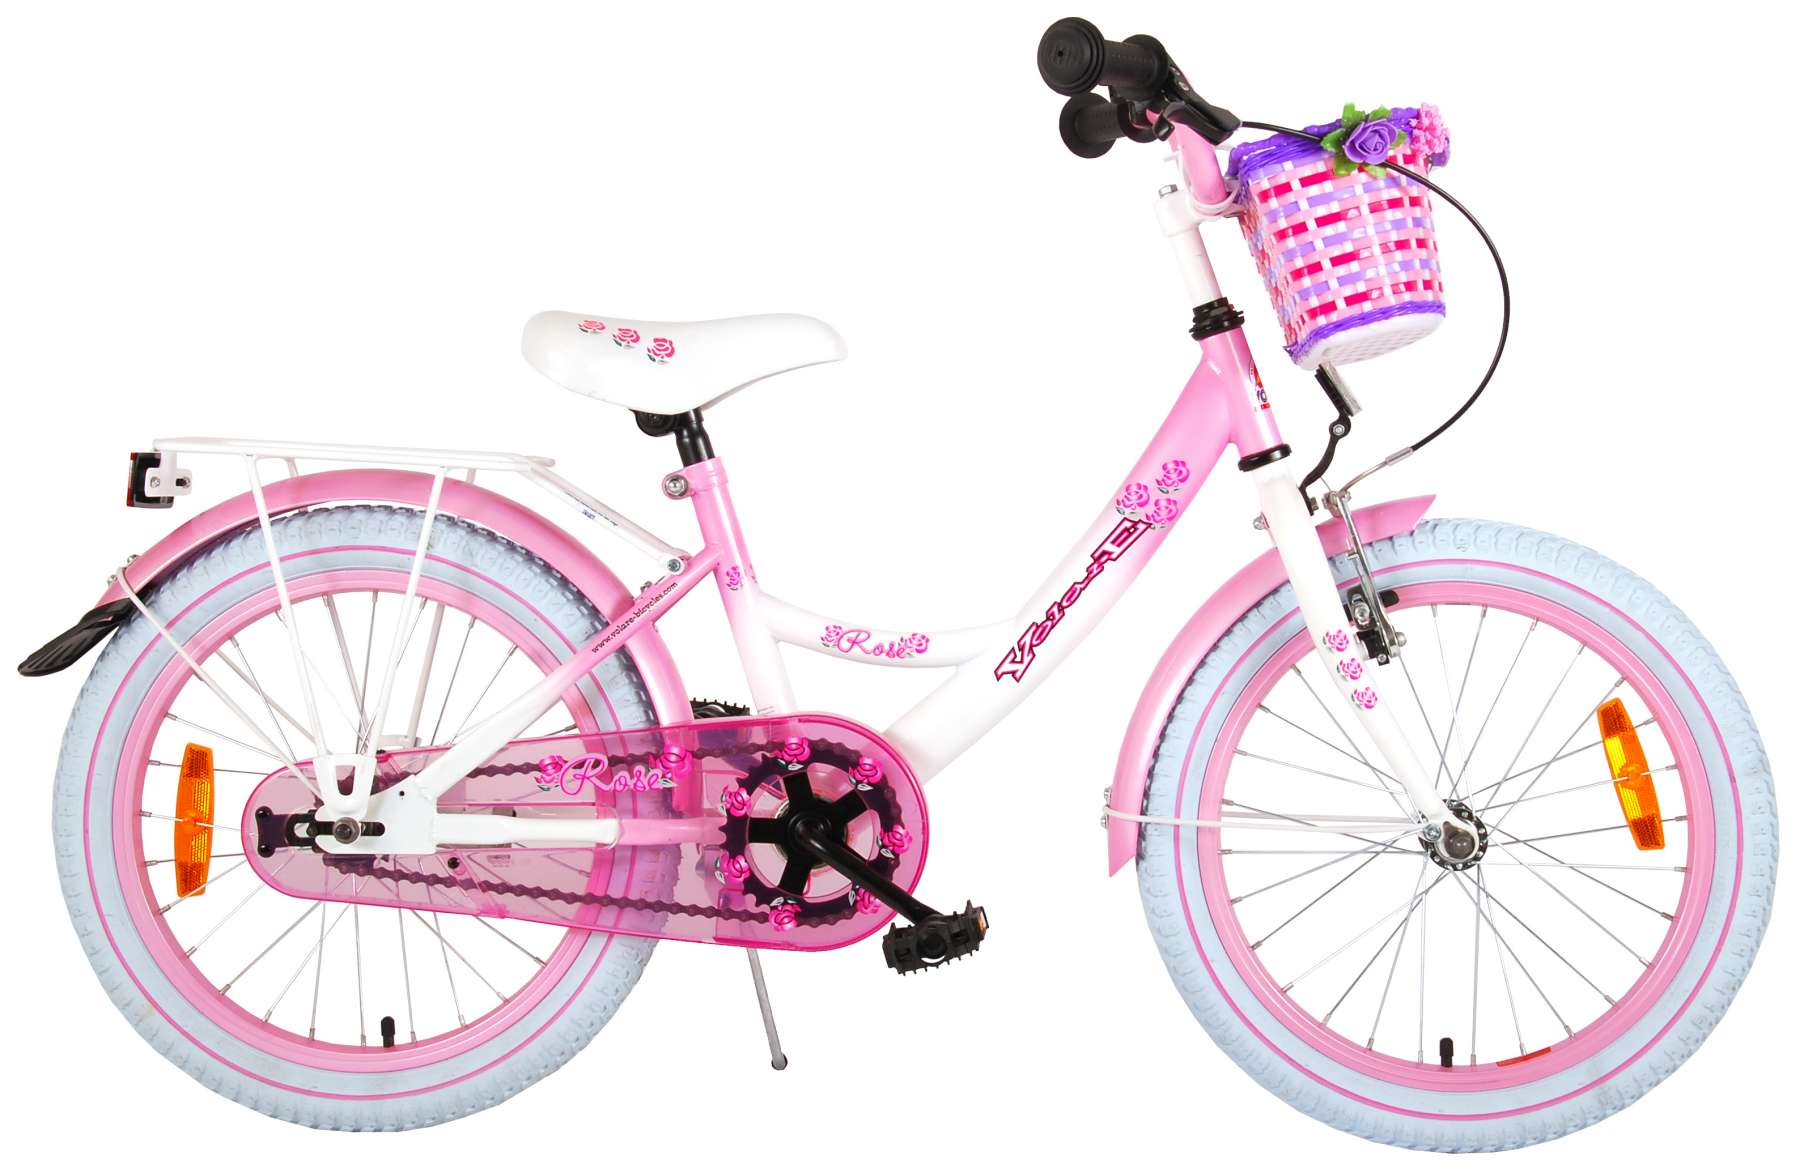 18 inch girls bike with gears